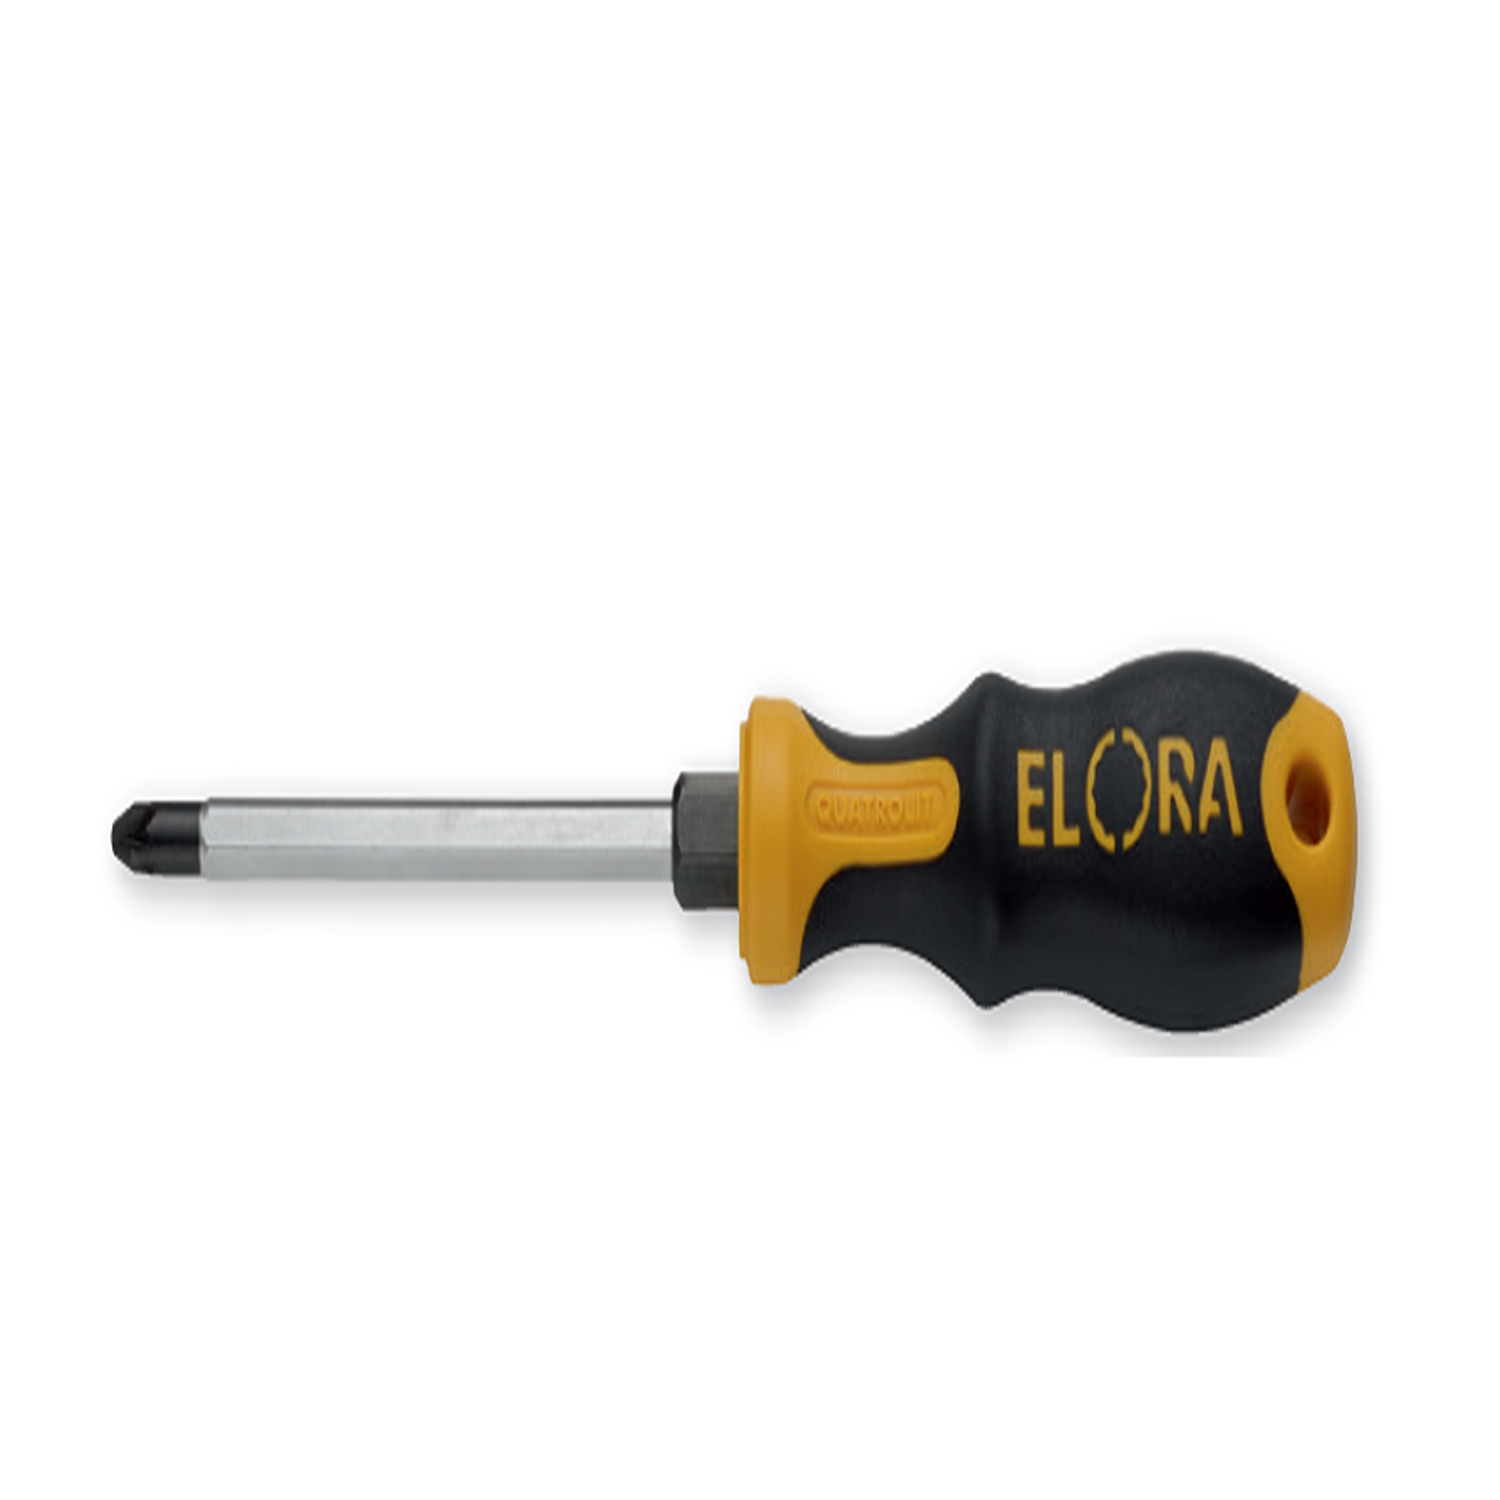 ELORA 559/1-PH Screwdriver for Cross Slotted Screws (ELORA Tools) - Premium Screwdriver from ELORA - Shop now at Yew Aik.